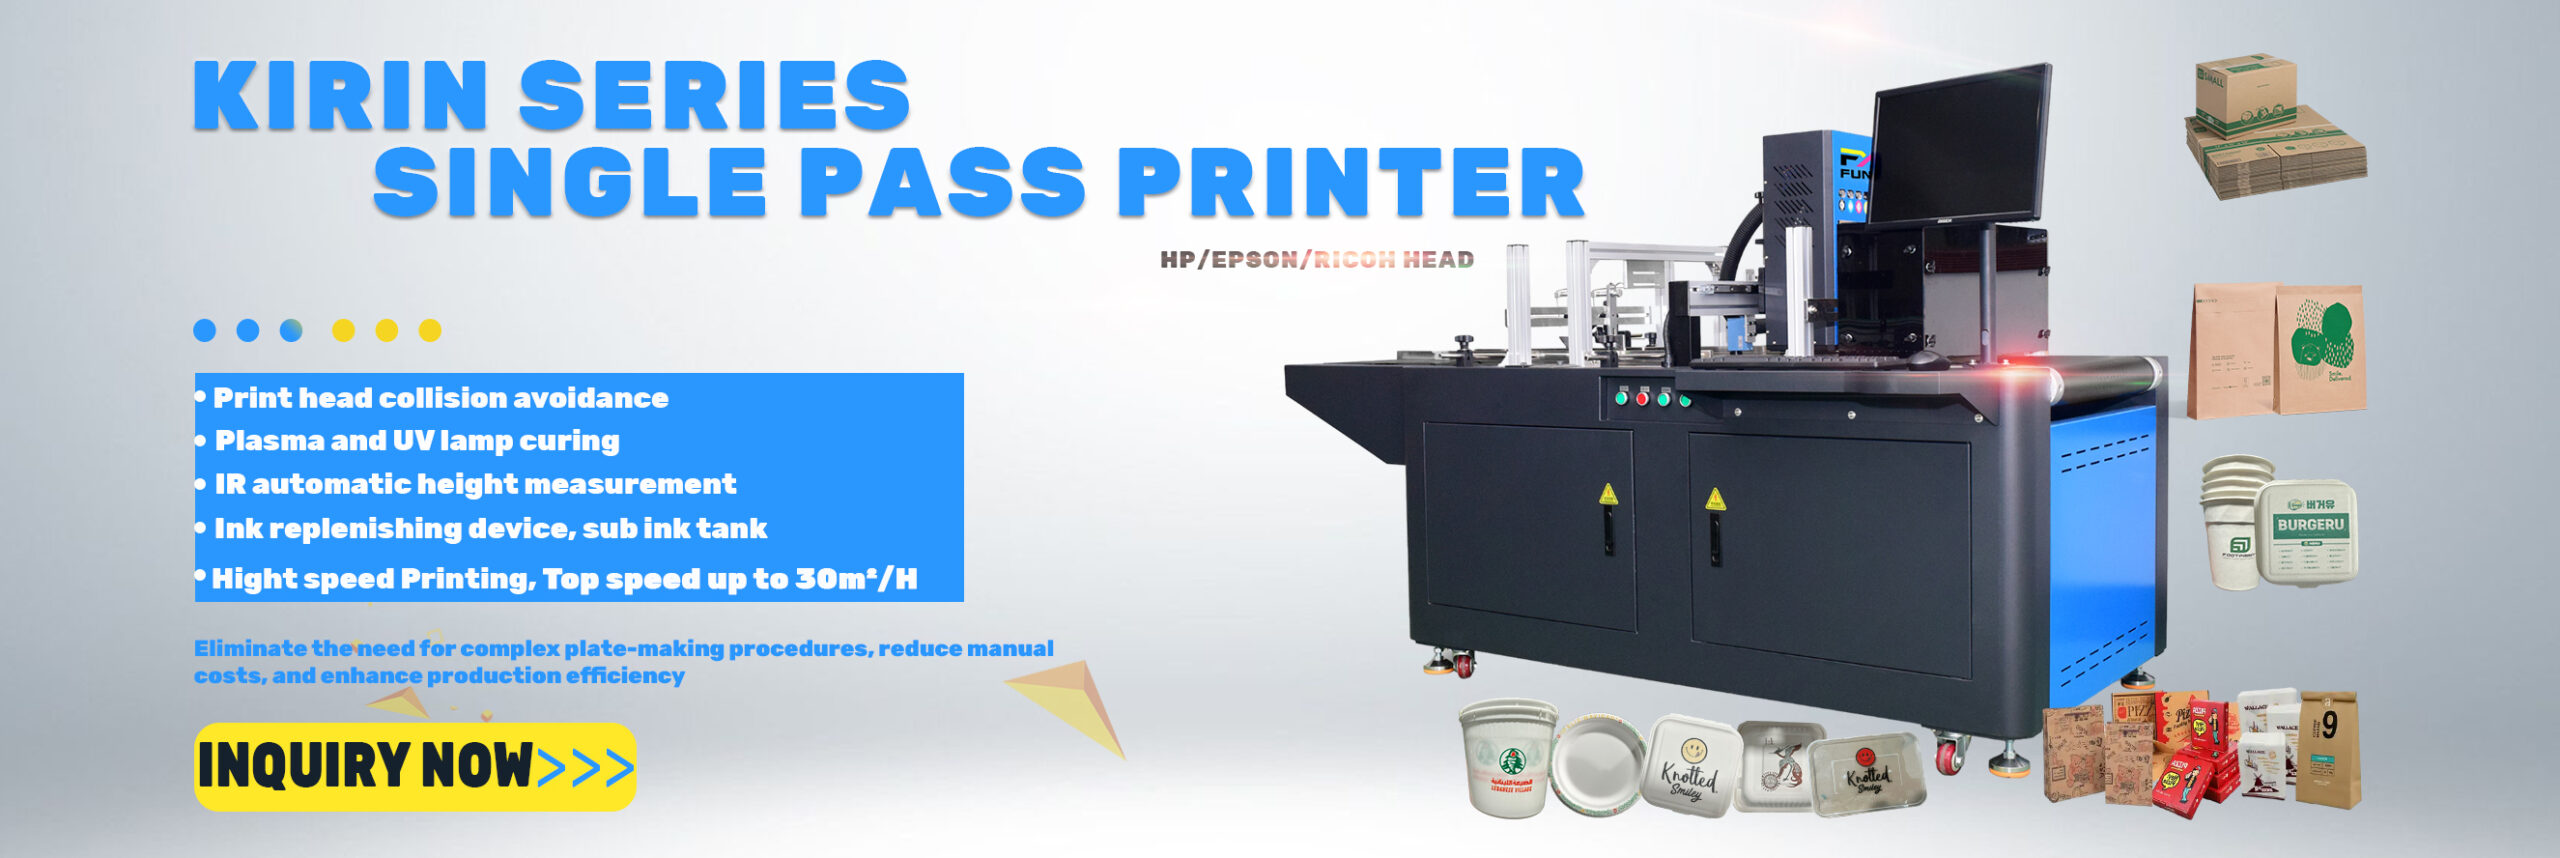 single-pass-printer-banner